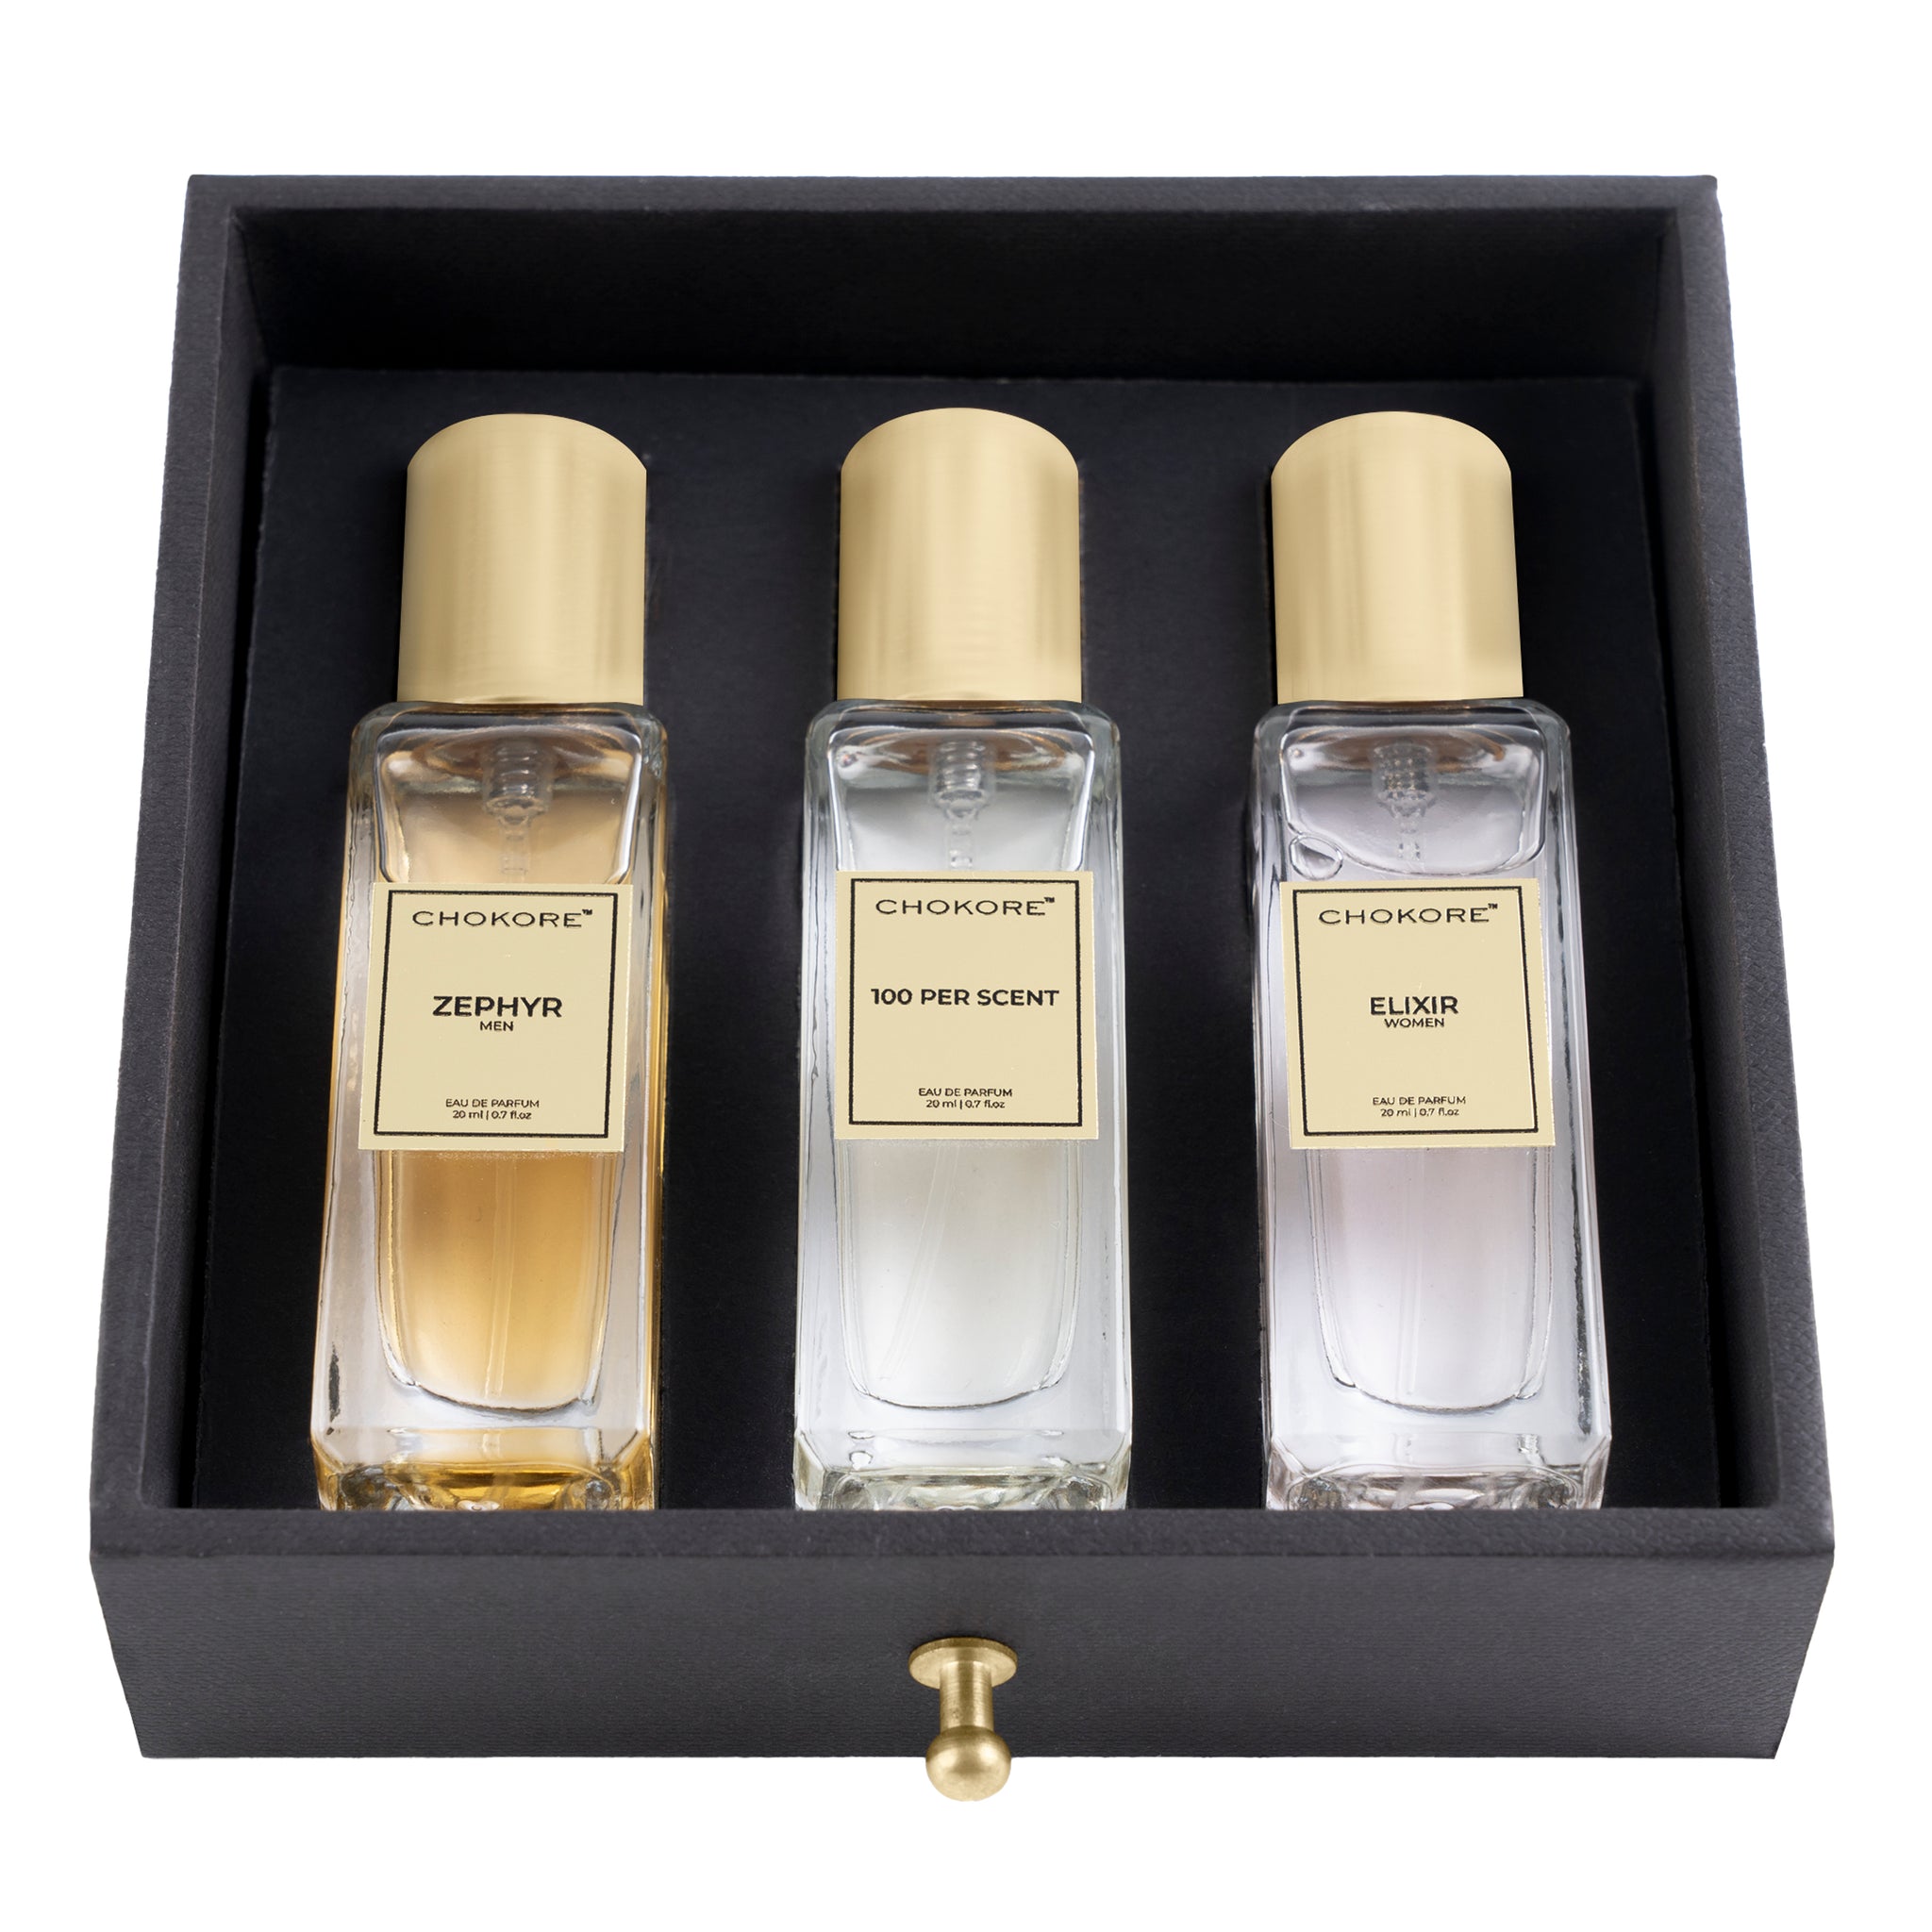 Chokore Perfume Combo Pack of 3 For Men & Women (Zephyr, Elixir, & 100 Per Scent) | 3 x 20 ml